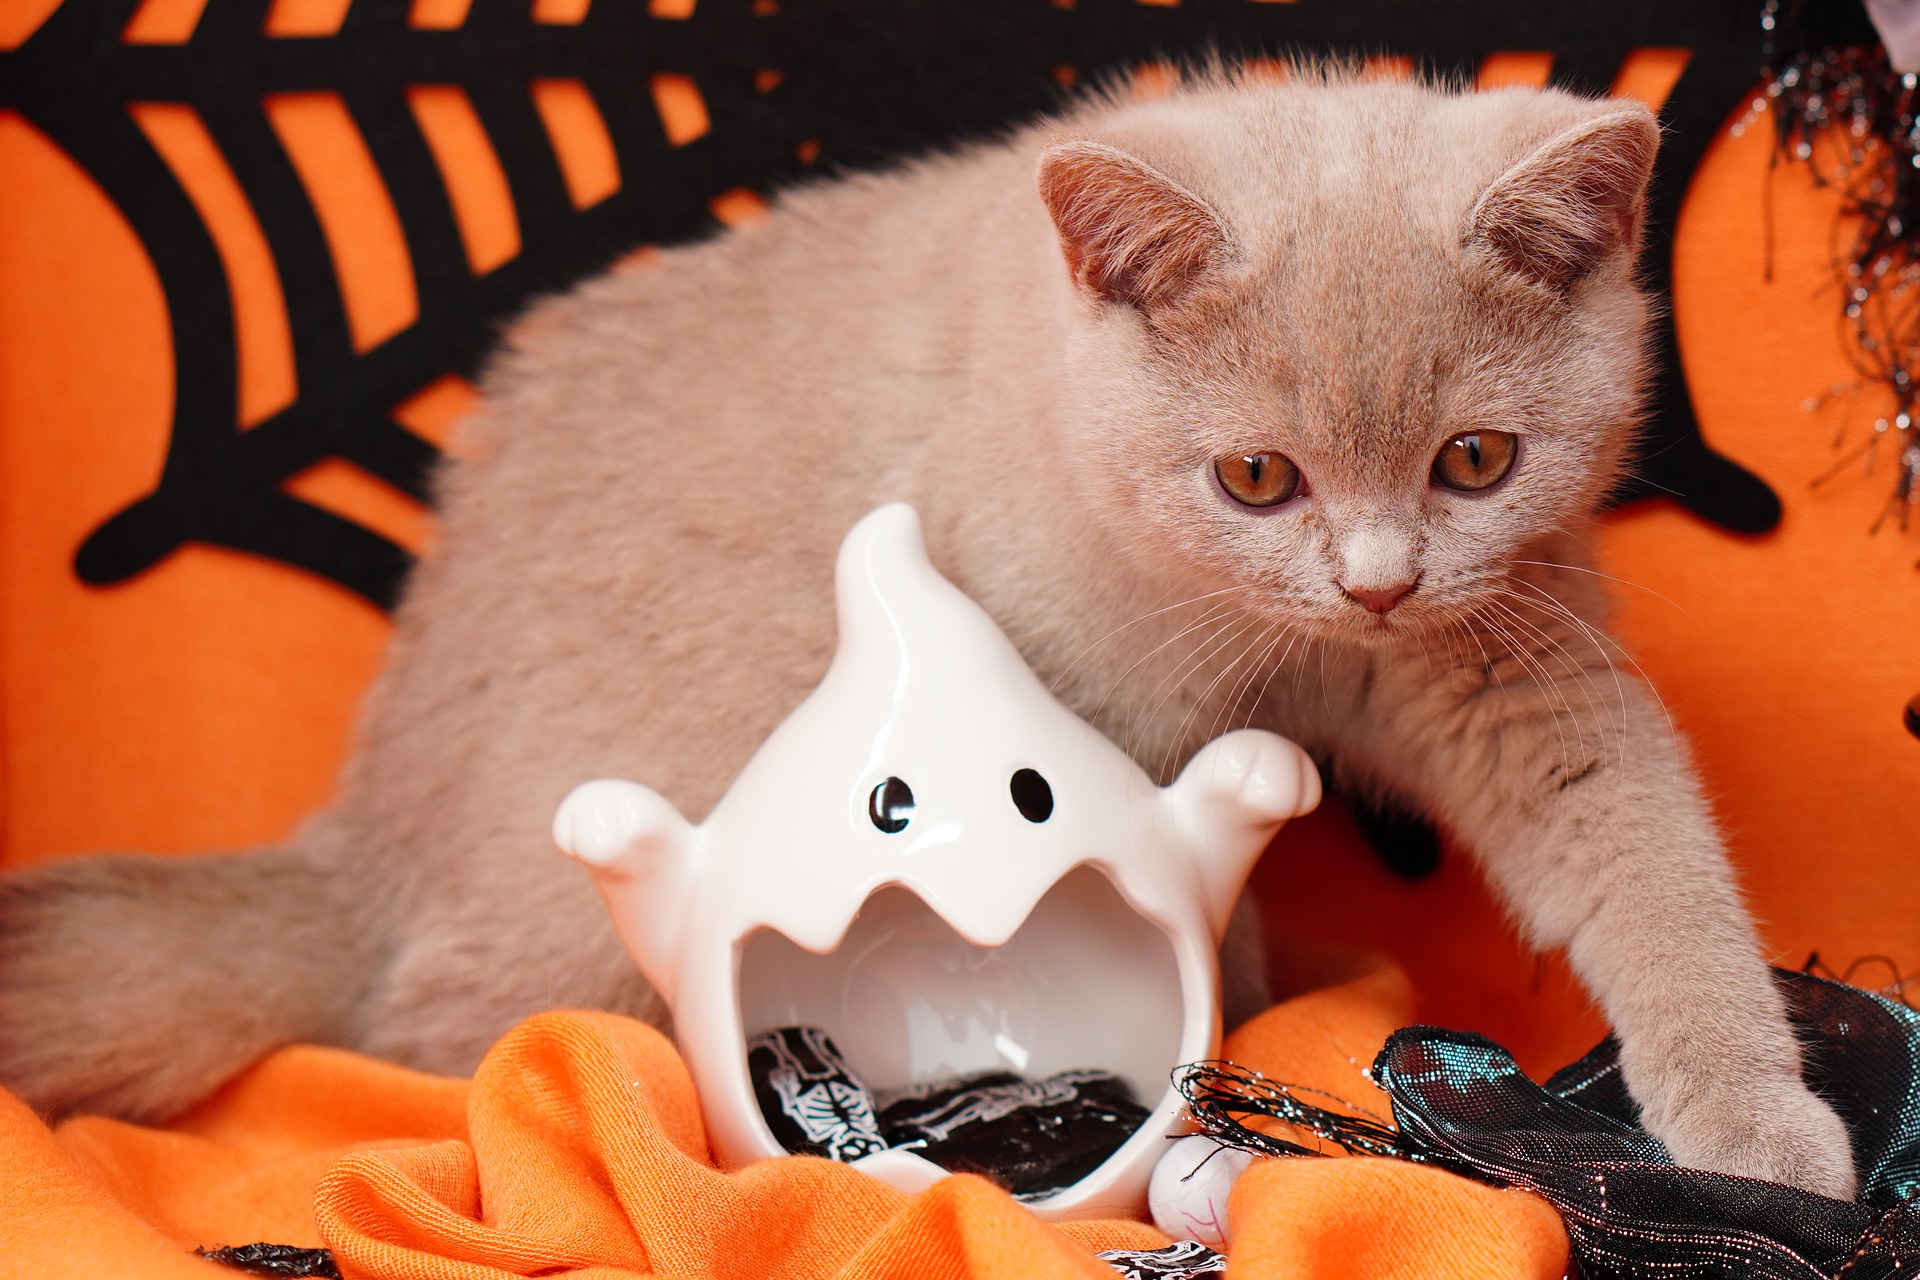 Cat climbing through Halloween decor and candy